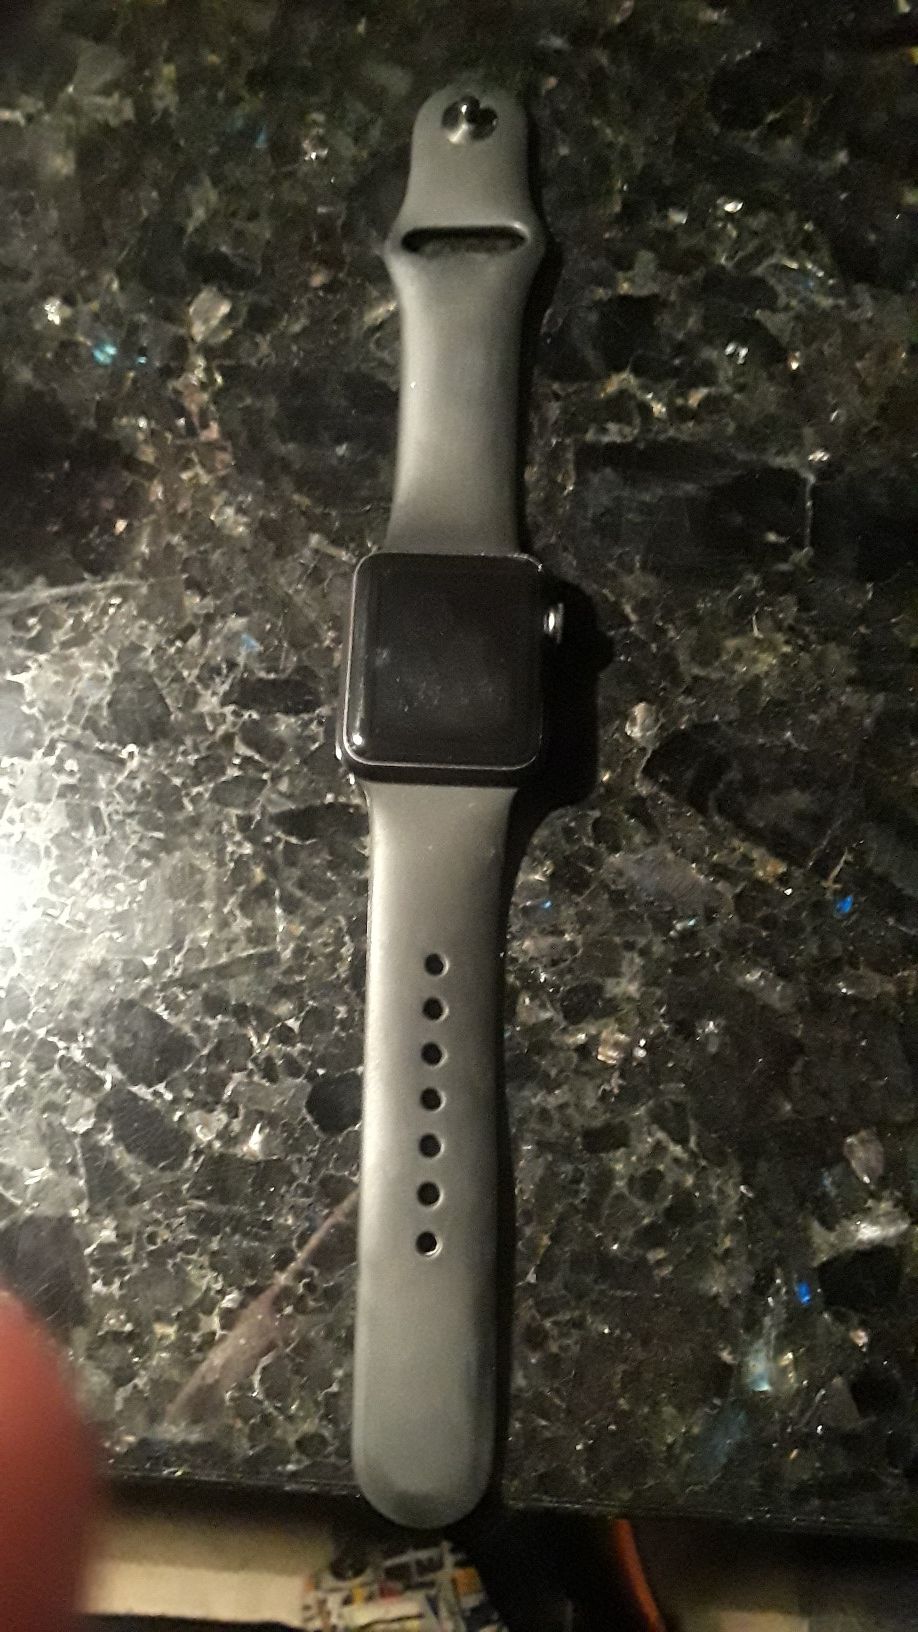 Apple watch 2nd generation